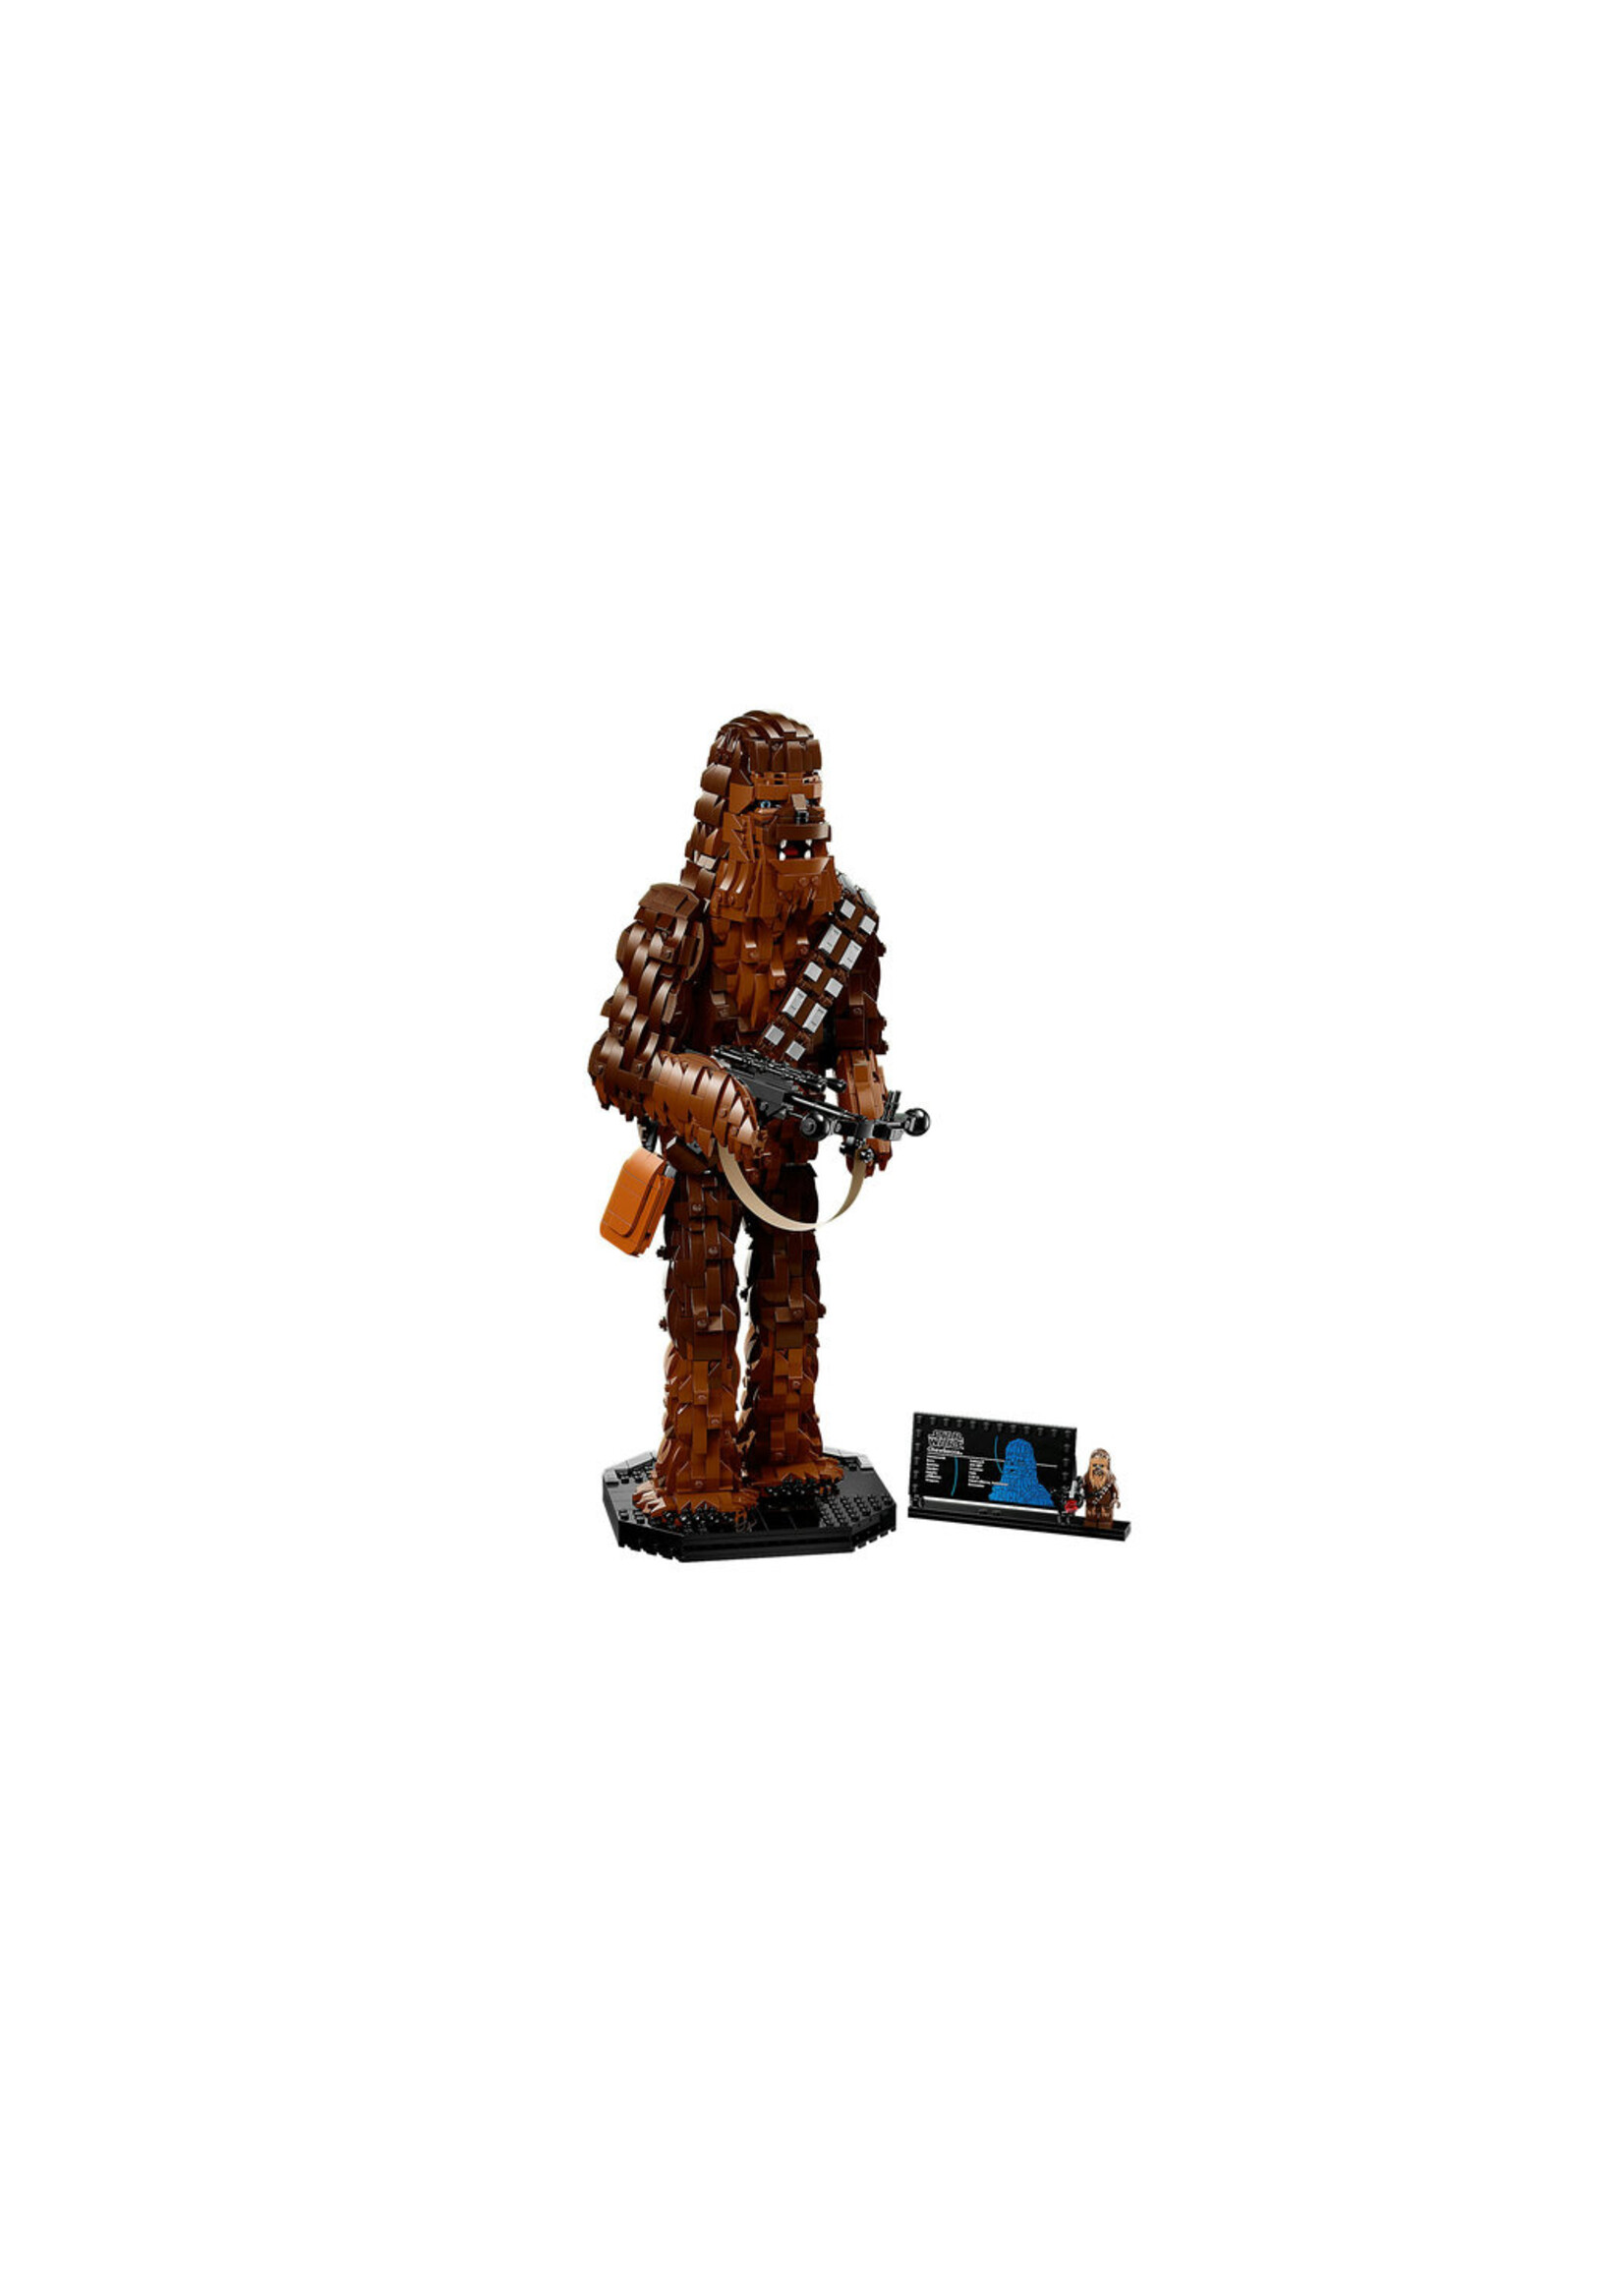 LEGO 75371 - Chewbacca